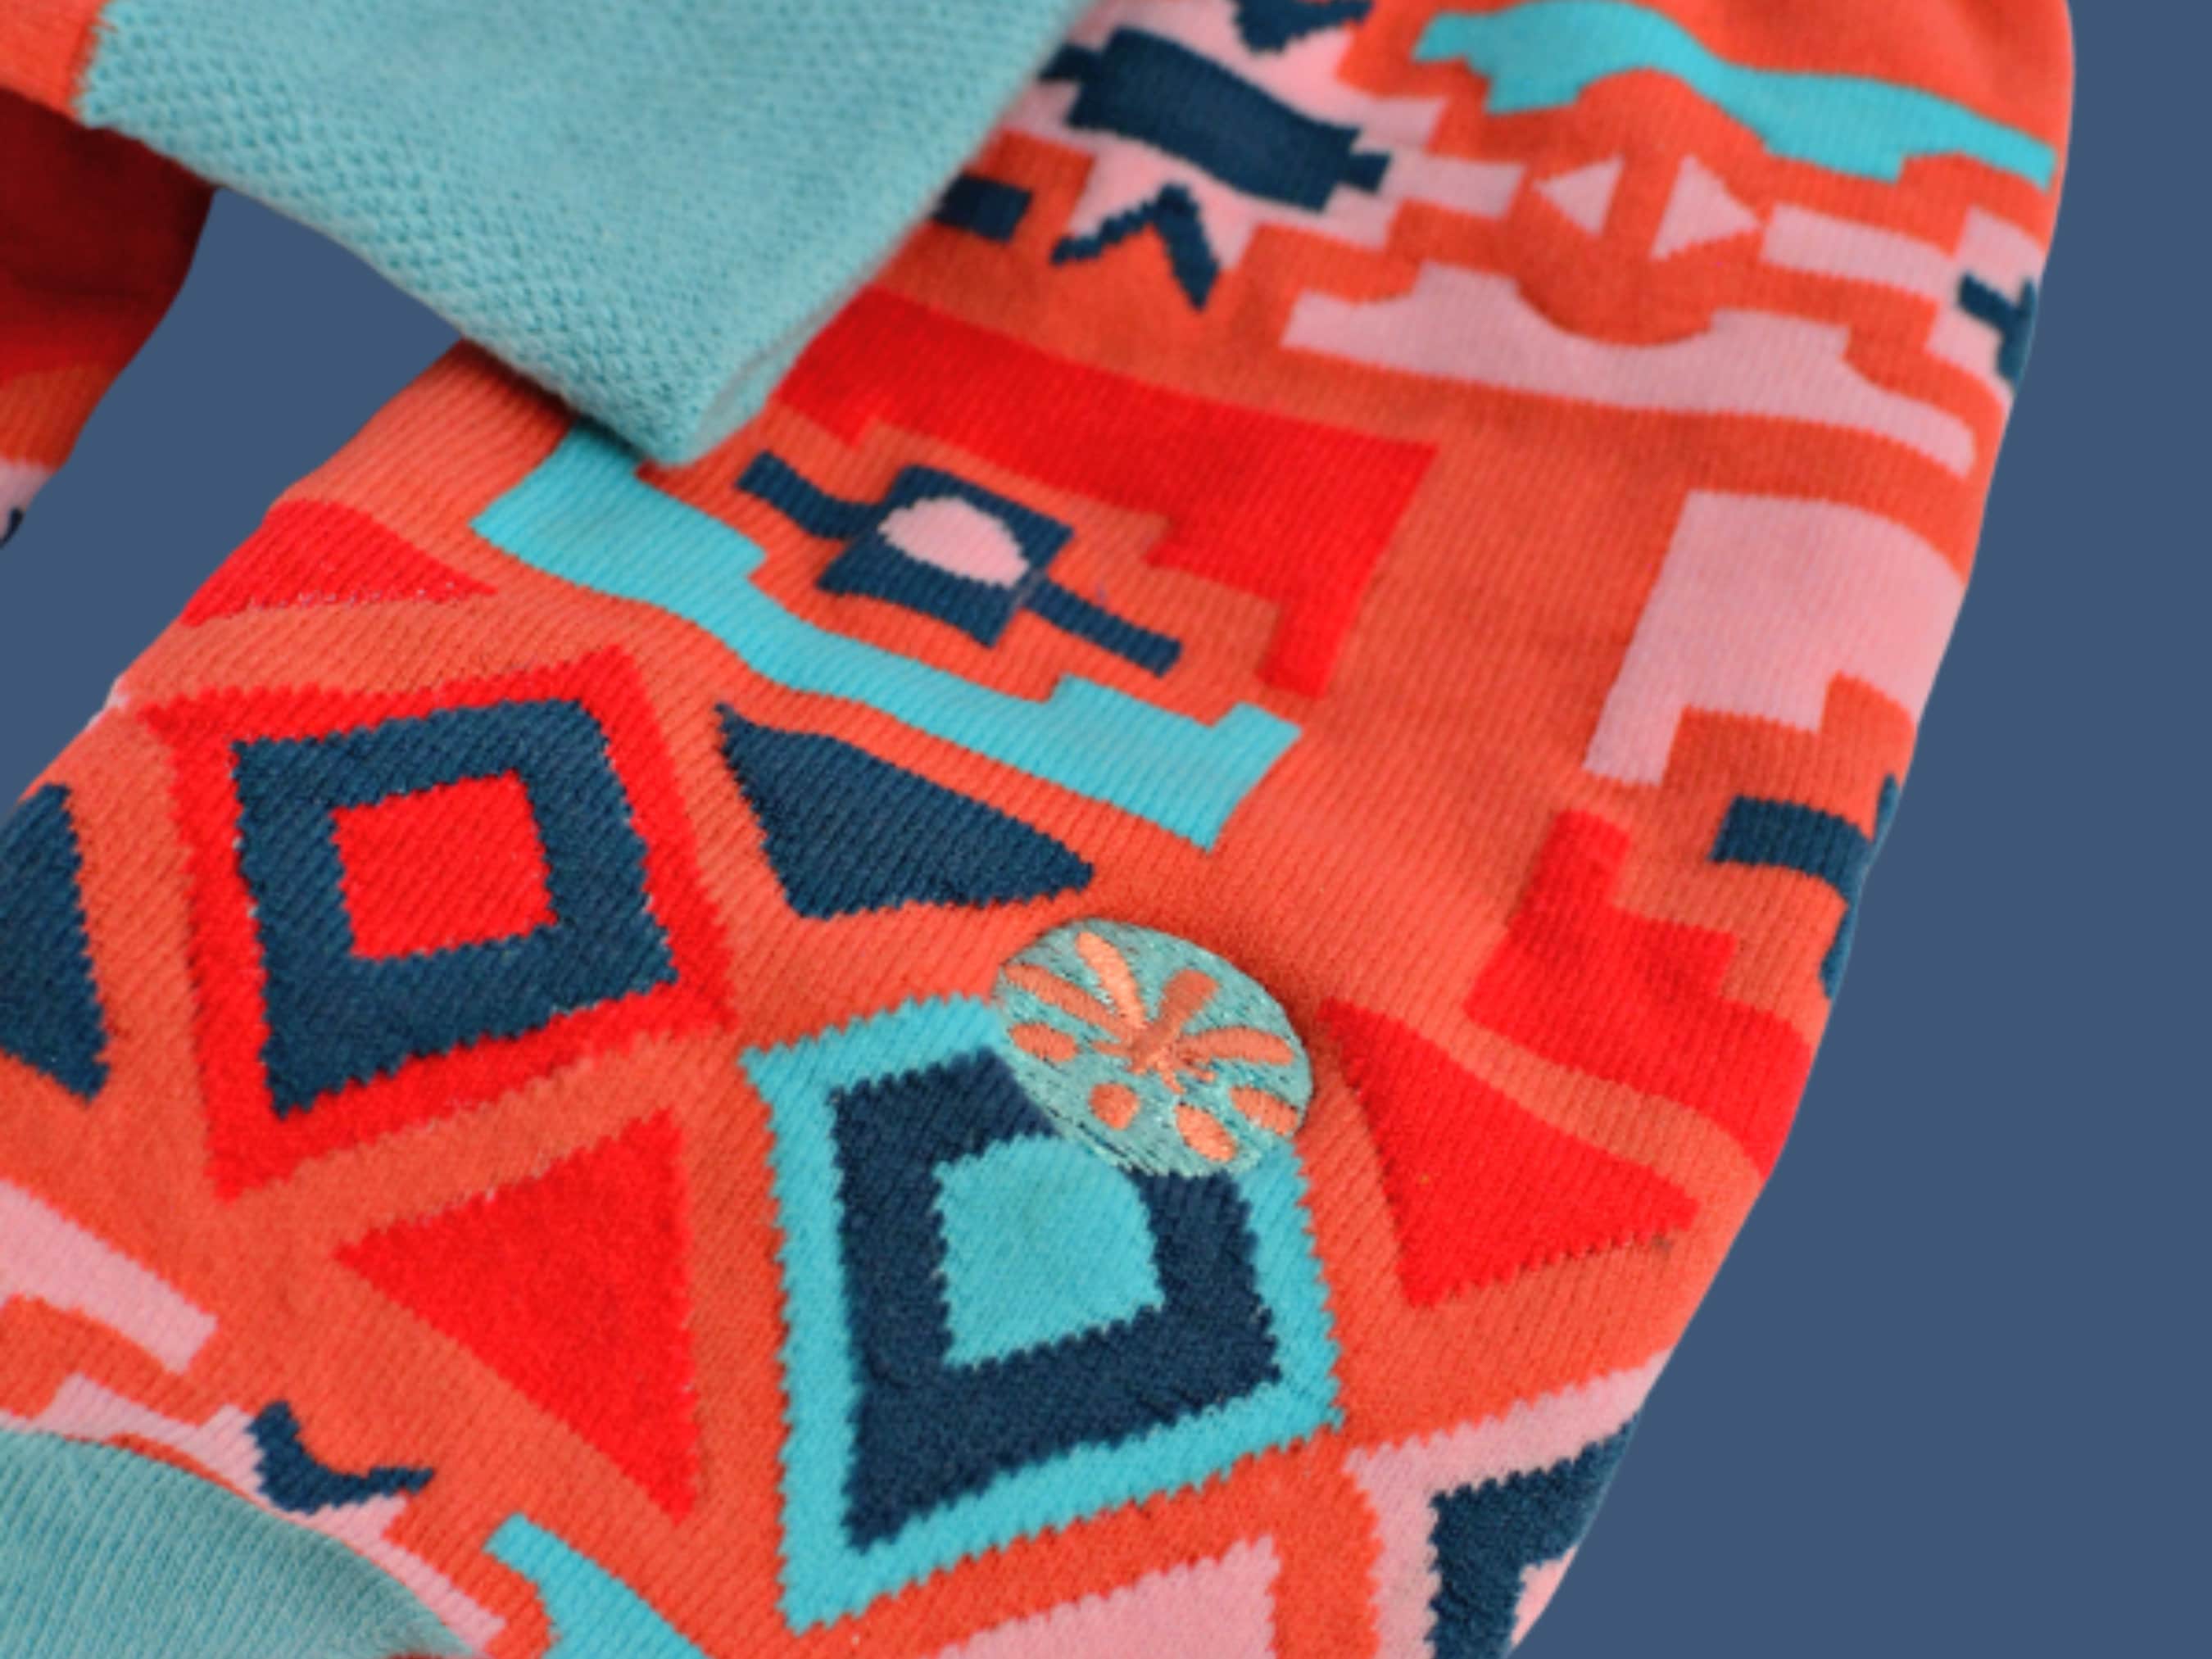 Egyptian Cotton Kente Socks  African Print Socks by Emowa